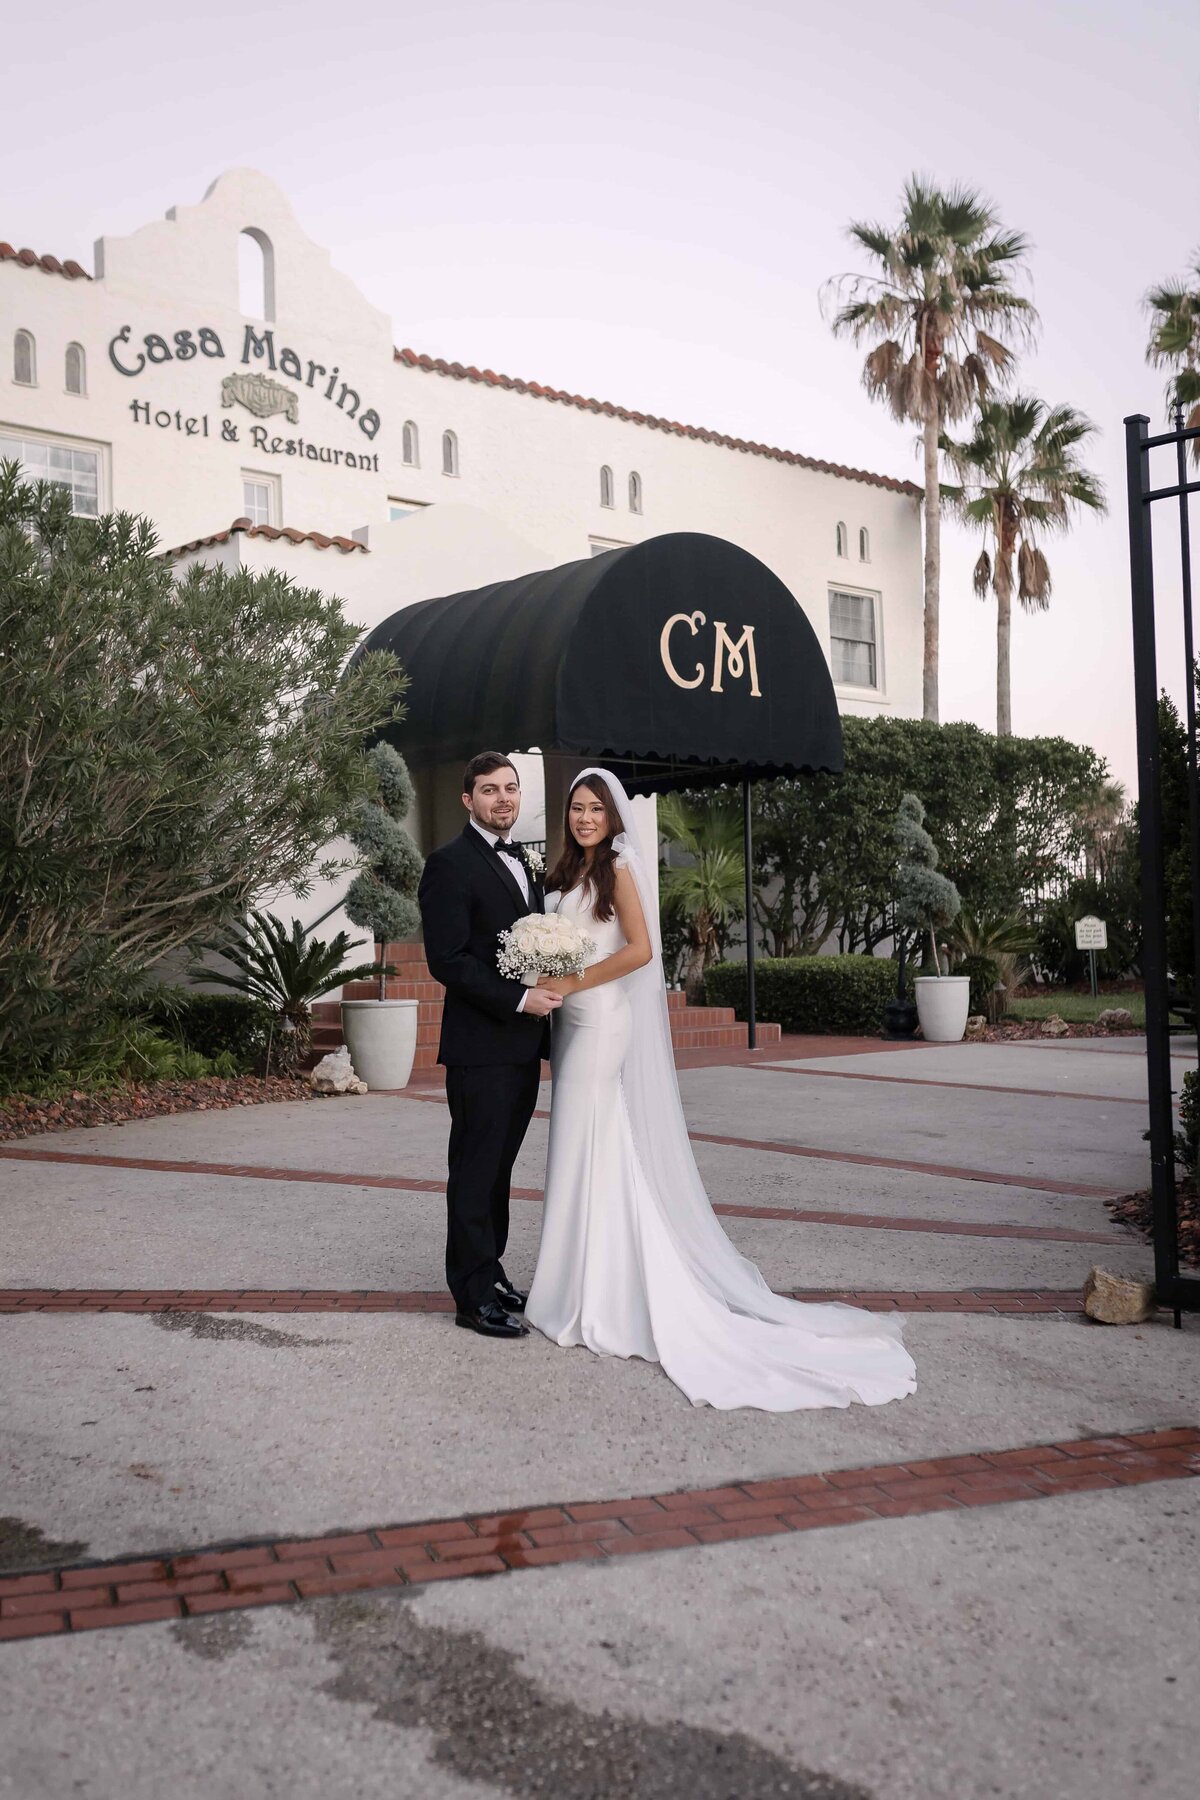 Bride and Groom in front of Casa Marina, Jacksonville FL | Jacksonville Wedding Photography - Phavy Photography